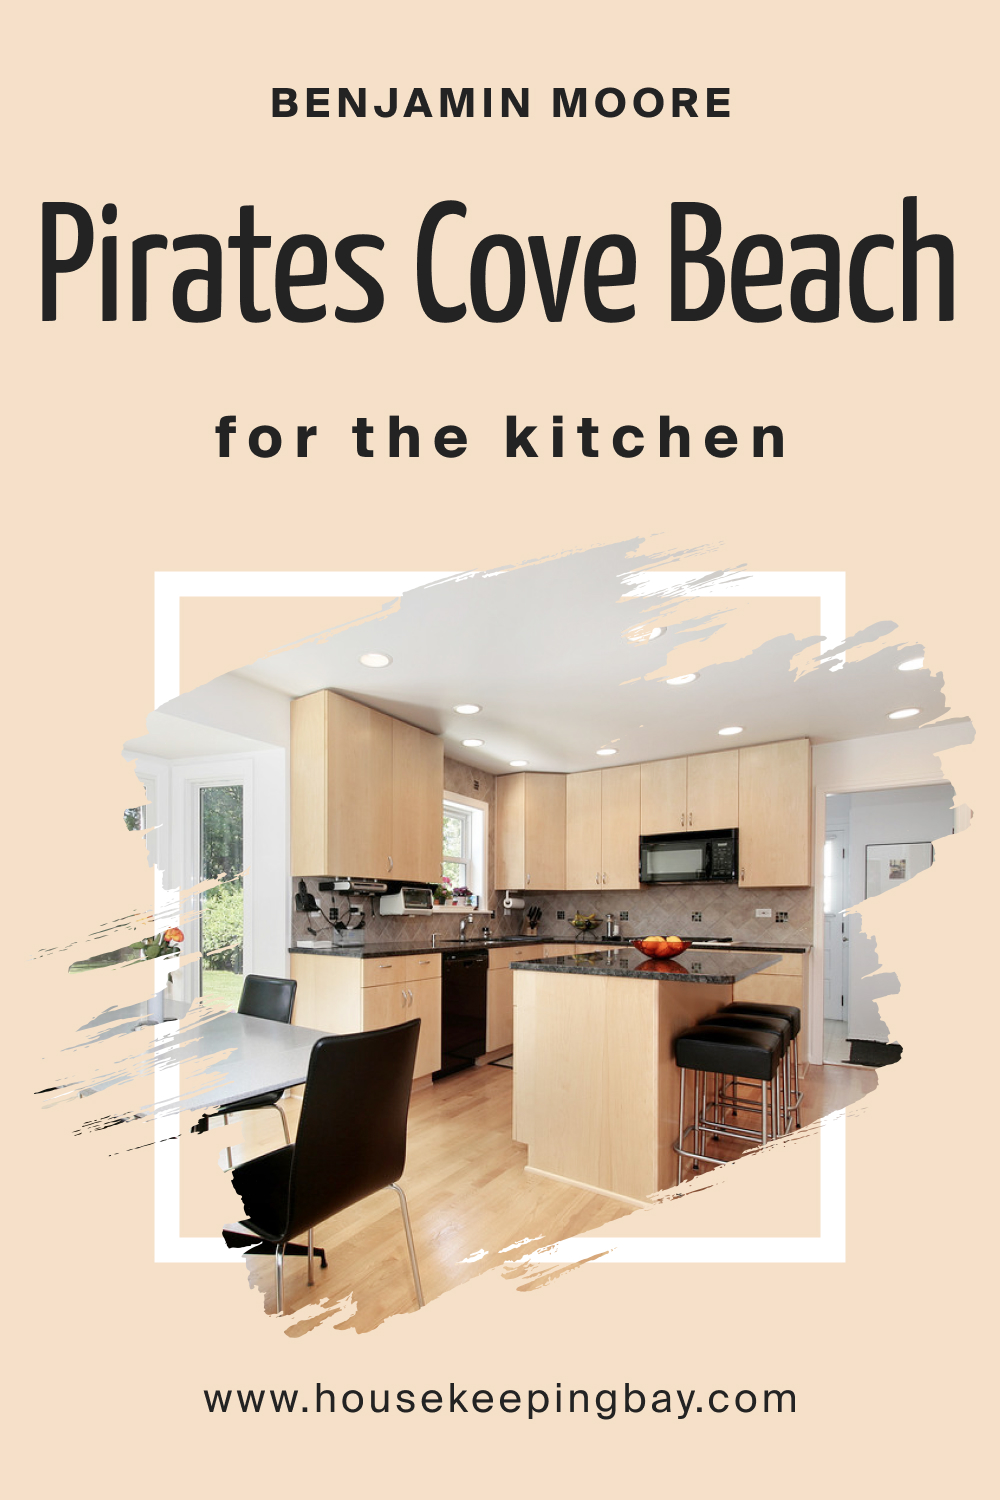 Benjamin Moore. Pirates Cove Beach OC 80 for the Kitchen